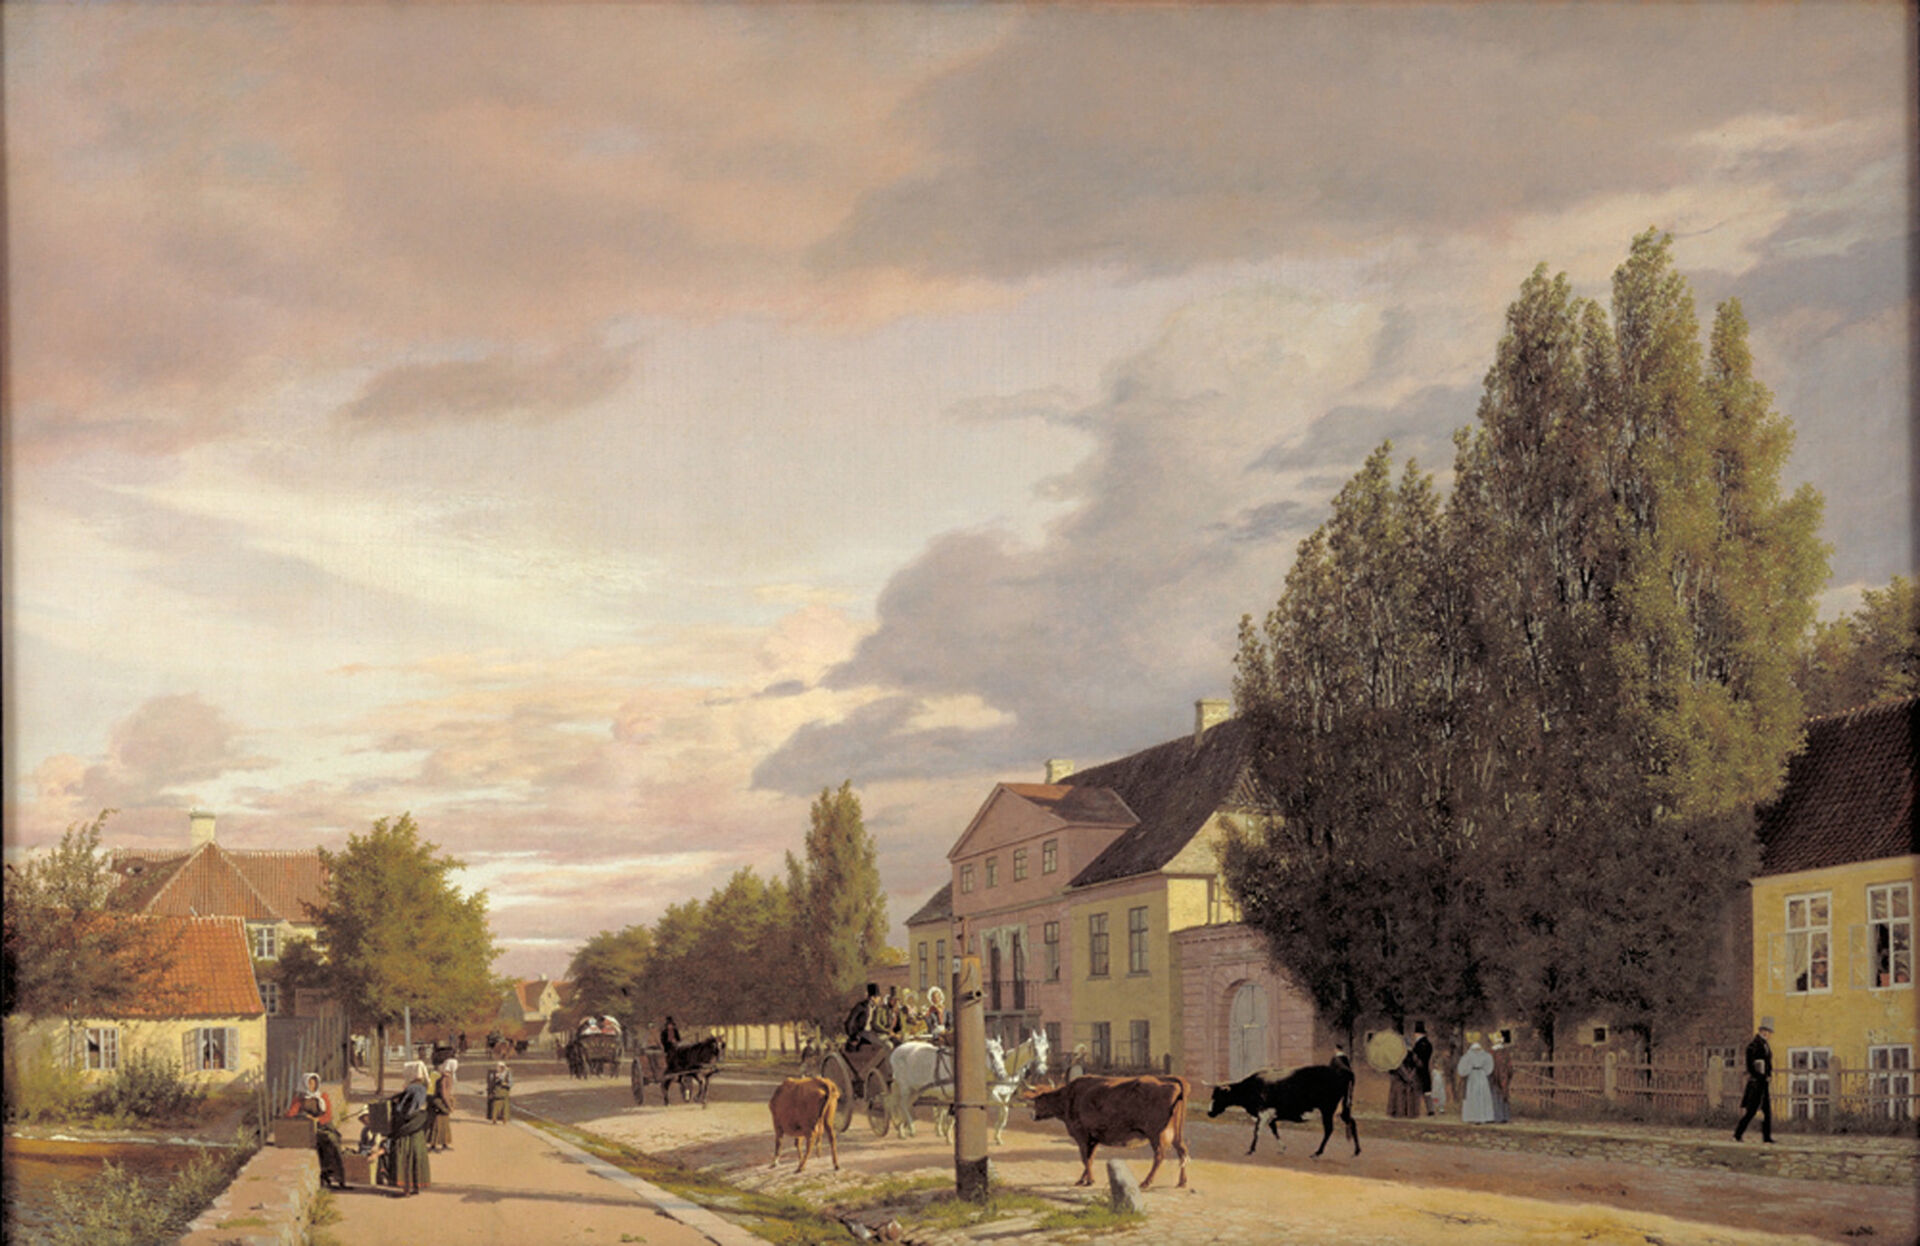 Christen Købke, View of a Street in Østerbro outside Copenhagen. Morning Light, 1836. Oil on canvas. The National Gallery of Denmark.